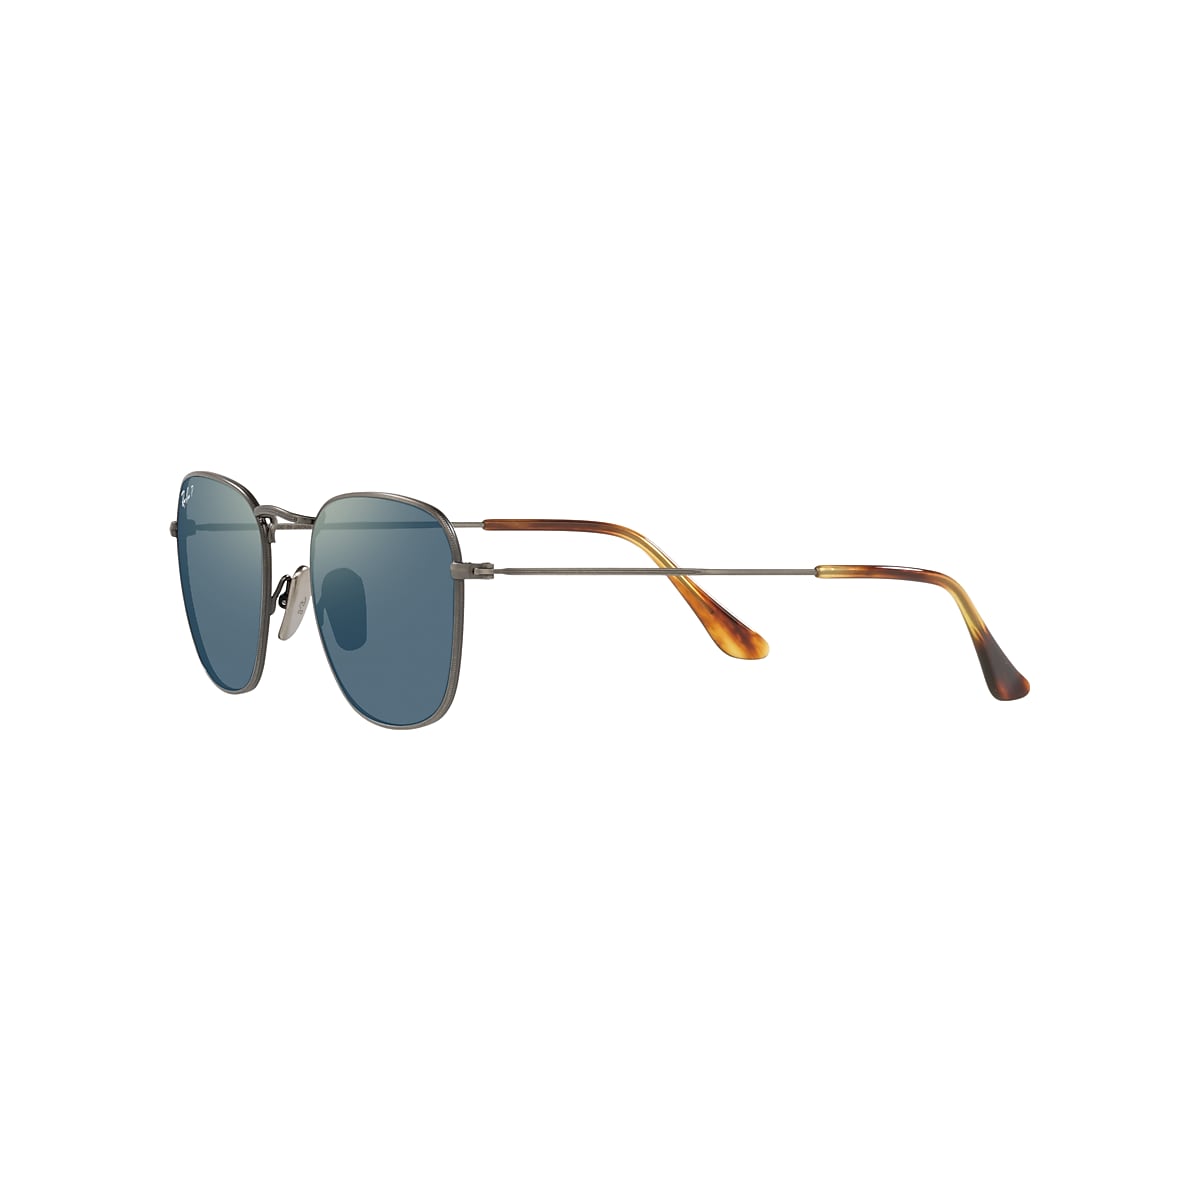 Frank Titanium Sunglasses in Gunmetal and Blue | Ray-Ban®